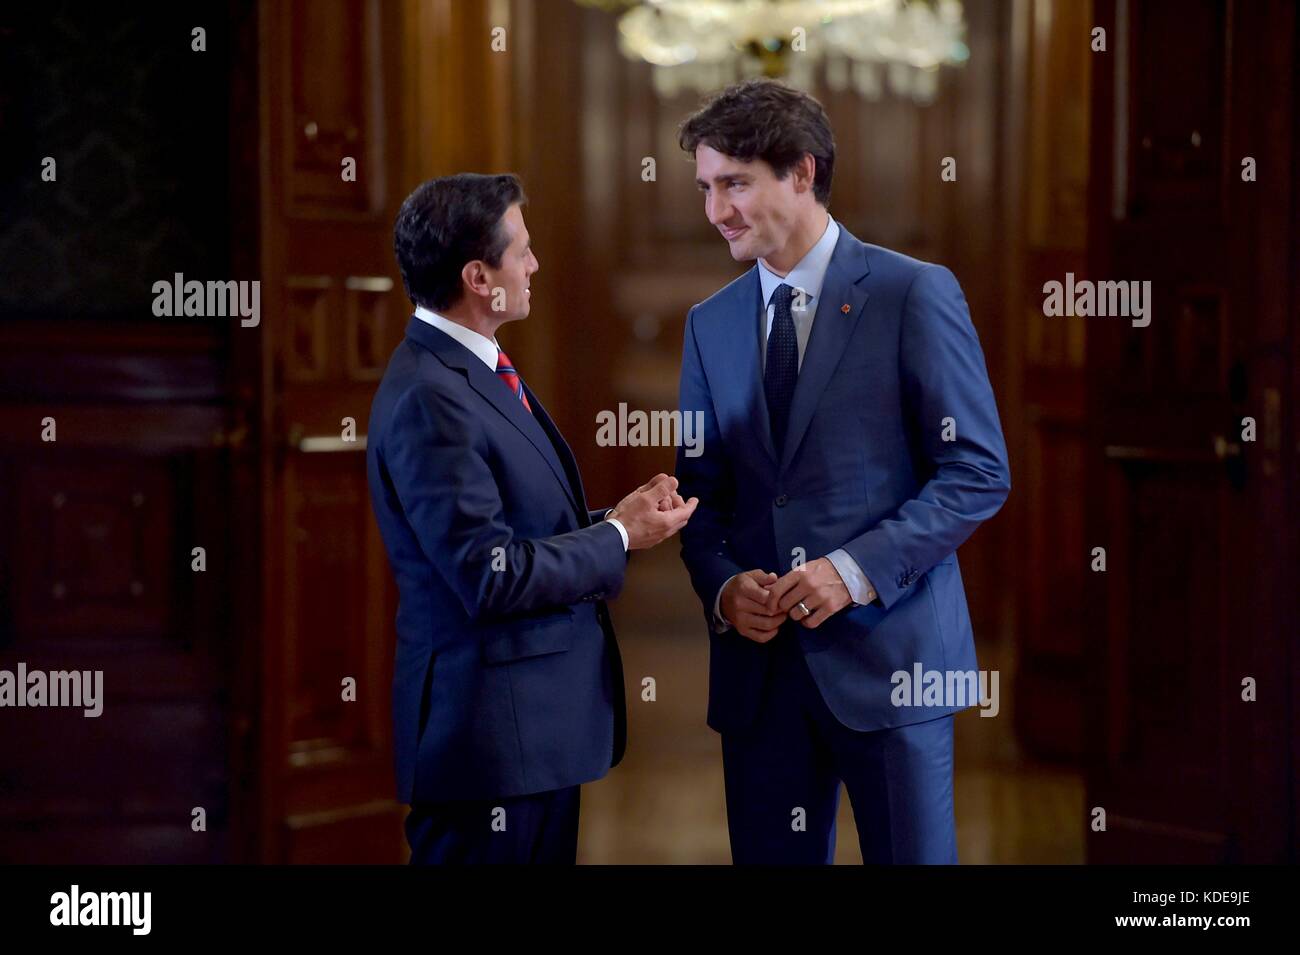 Canadian Prime Minister Justin Trudeau and Mexican President Enrique Pena Nieto walk together following a bilateral meeting at Palacio Nacional October 12, 2017 in Mexico City, Mexico.   (presidenciamx via Planetpix) Stock Photo